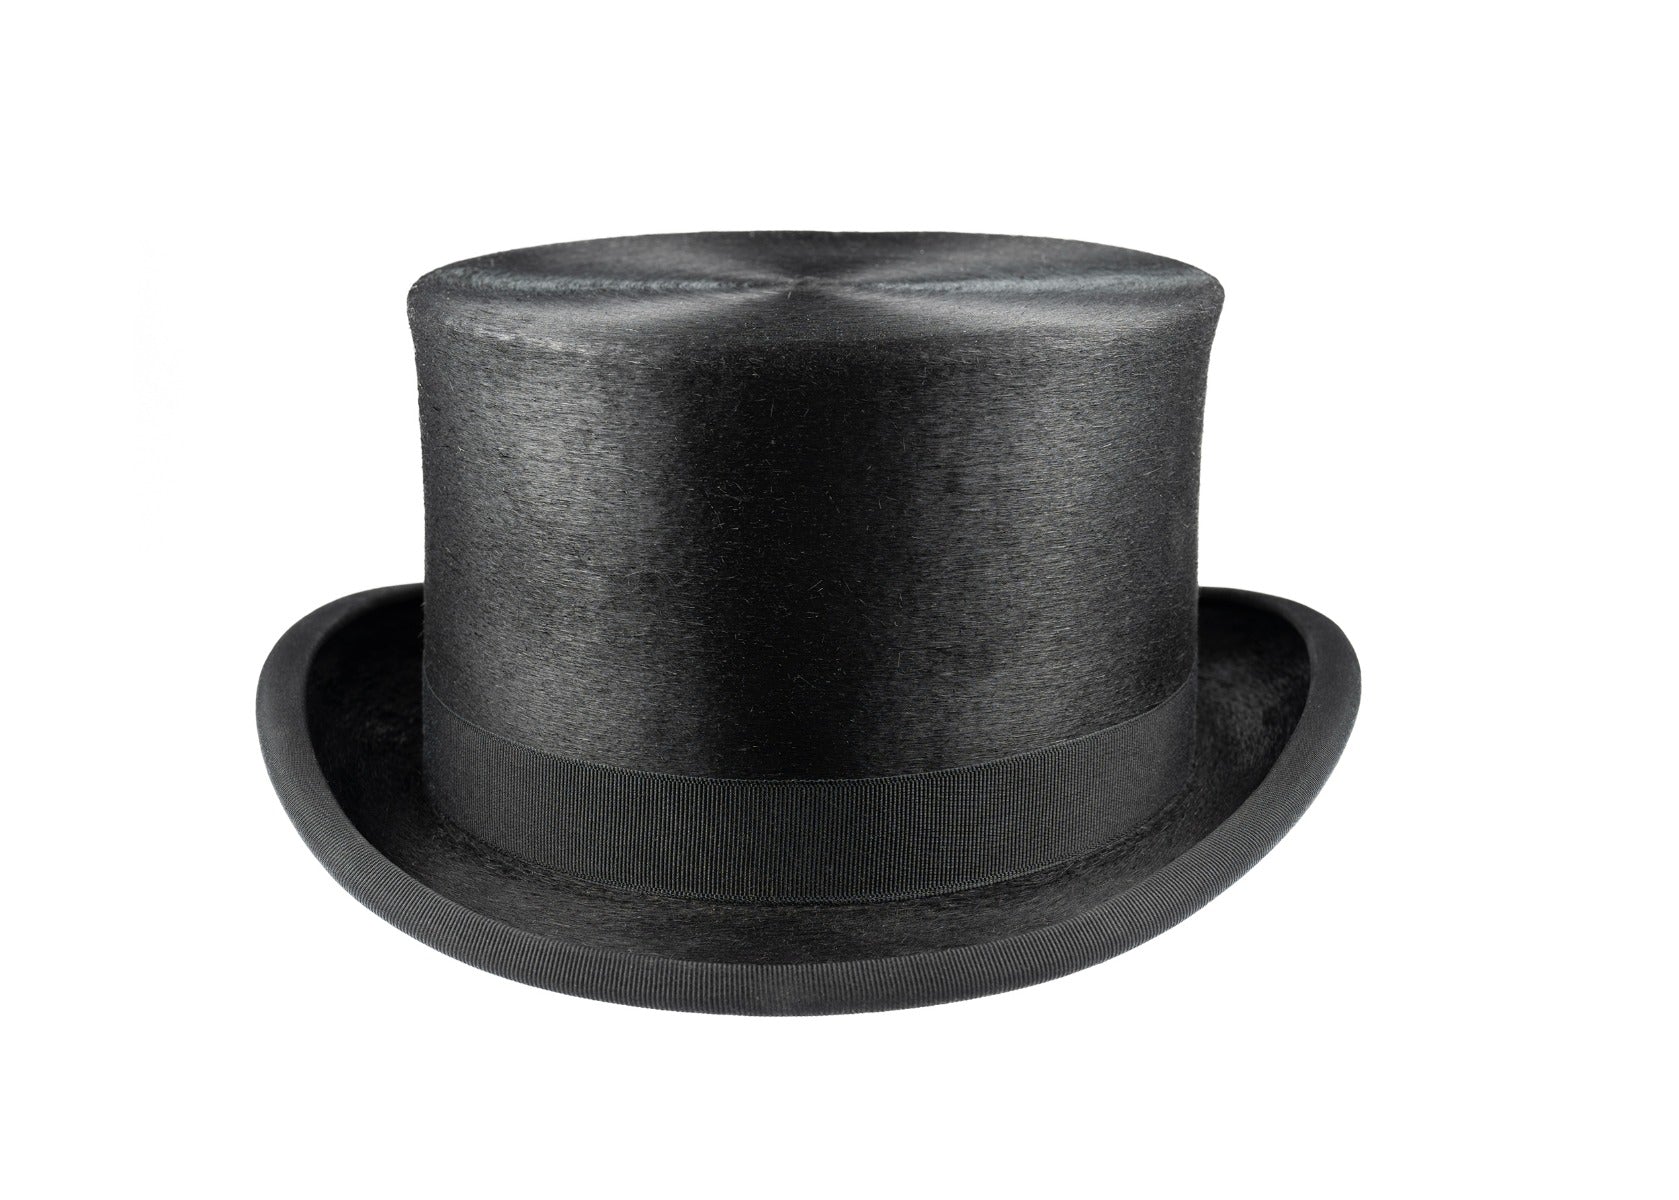 Fur Felt Dressage Hat - Black